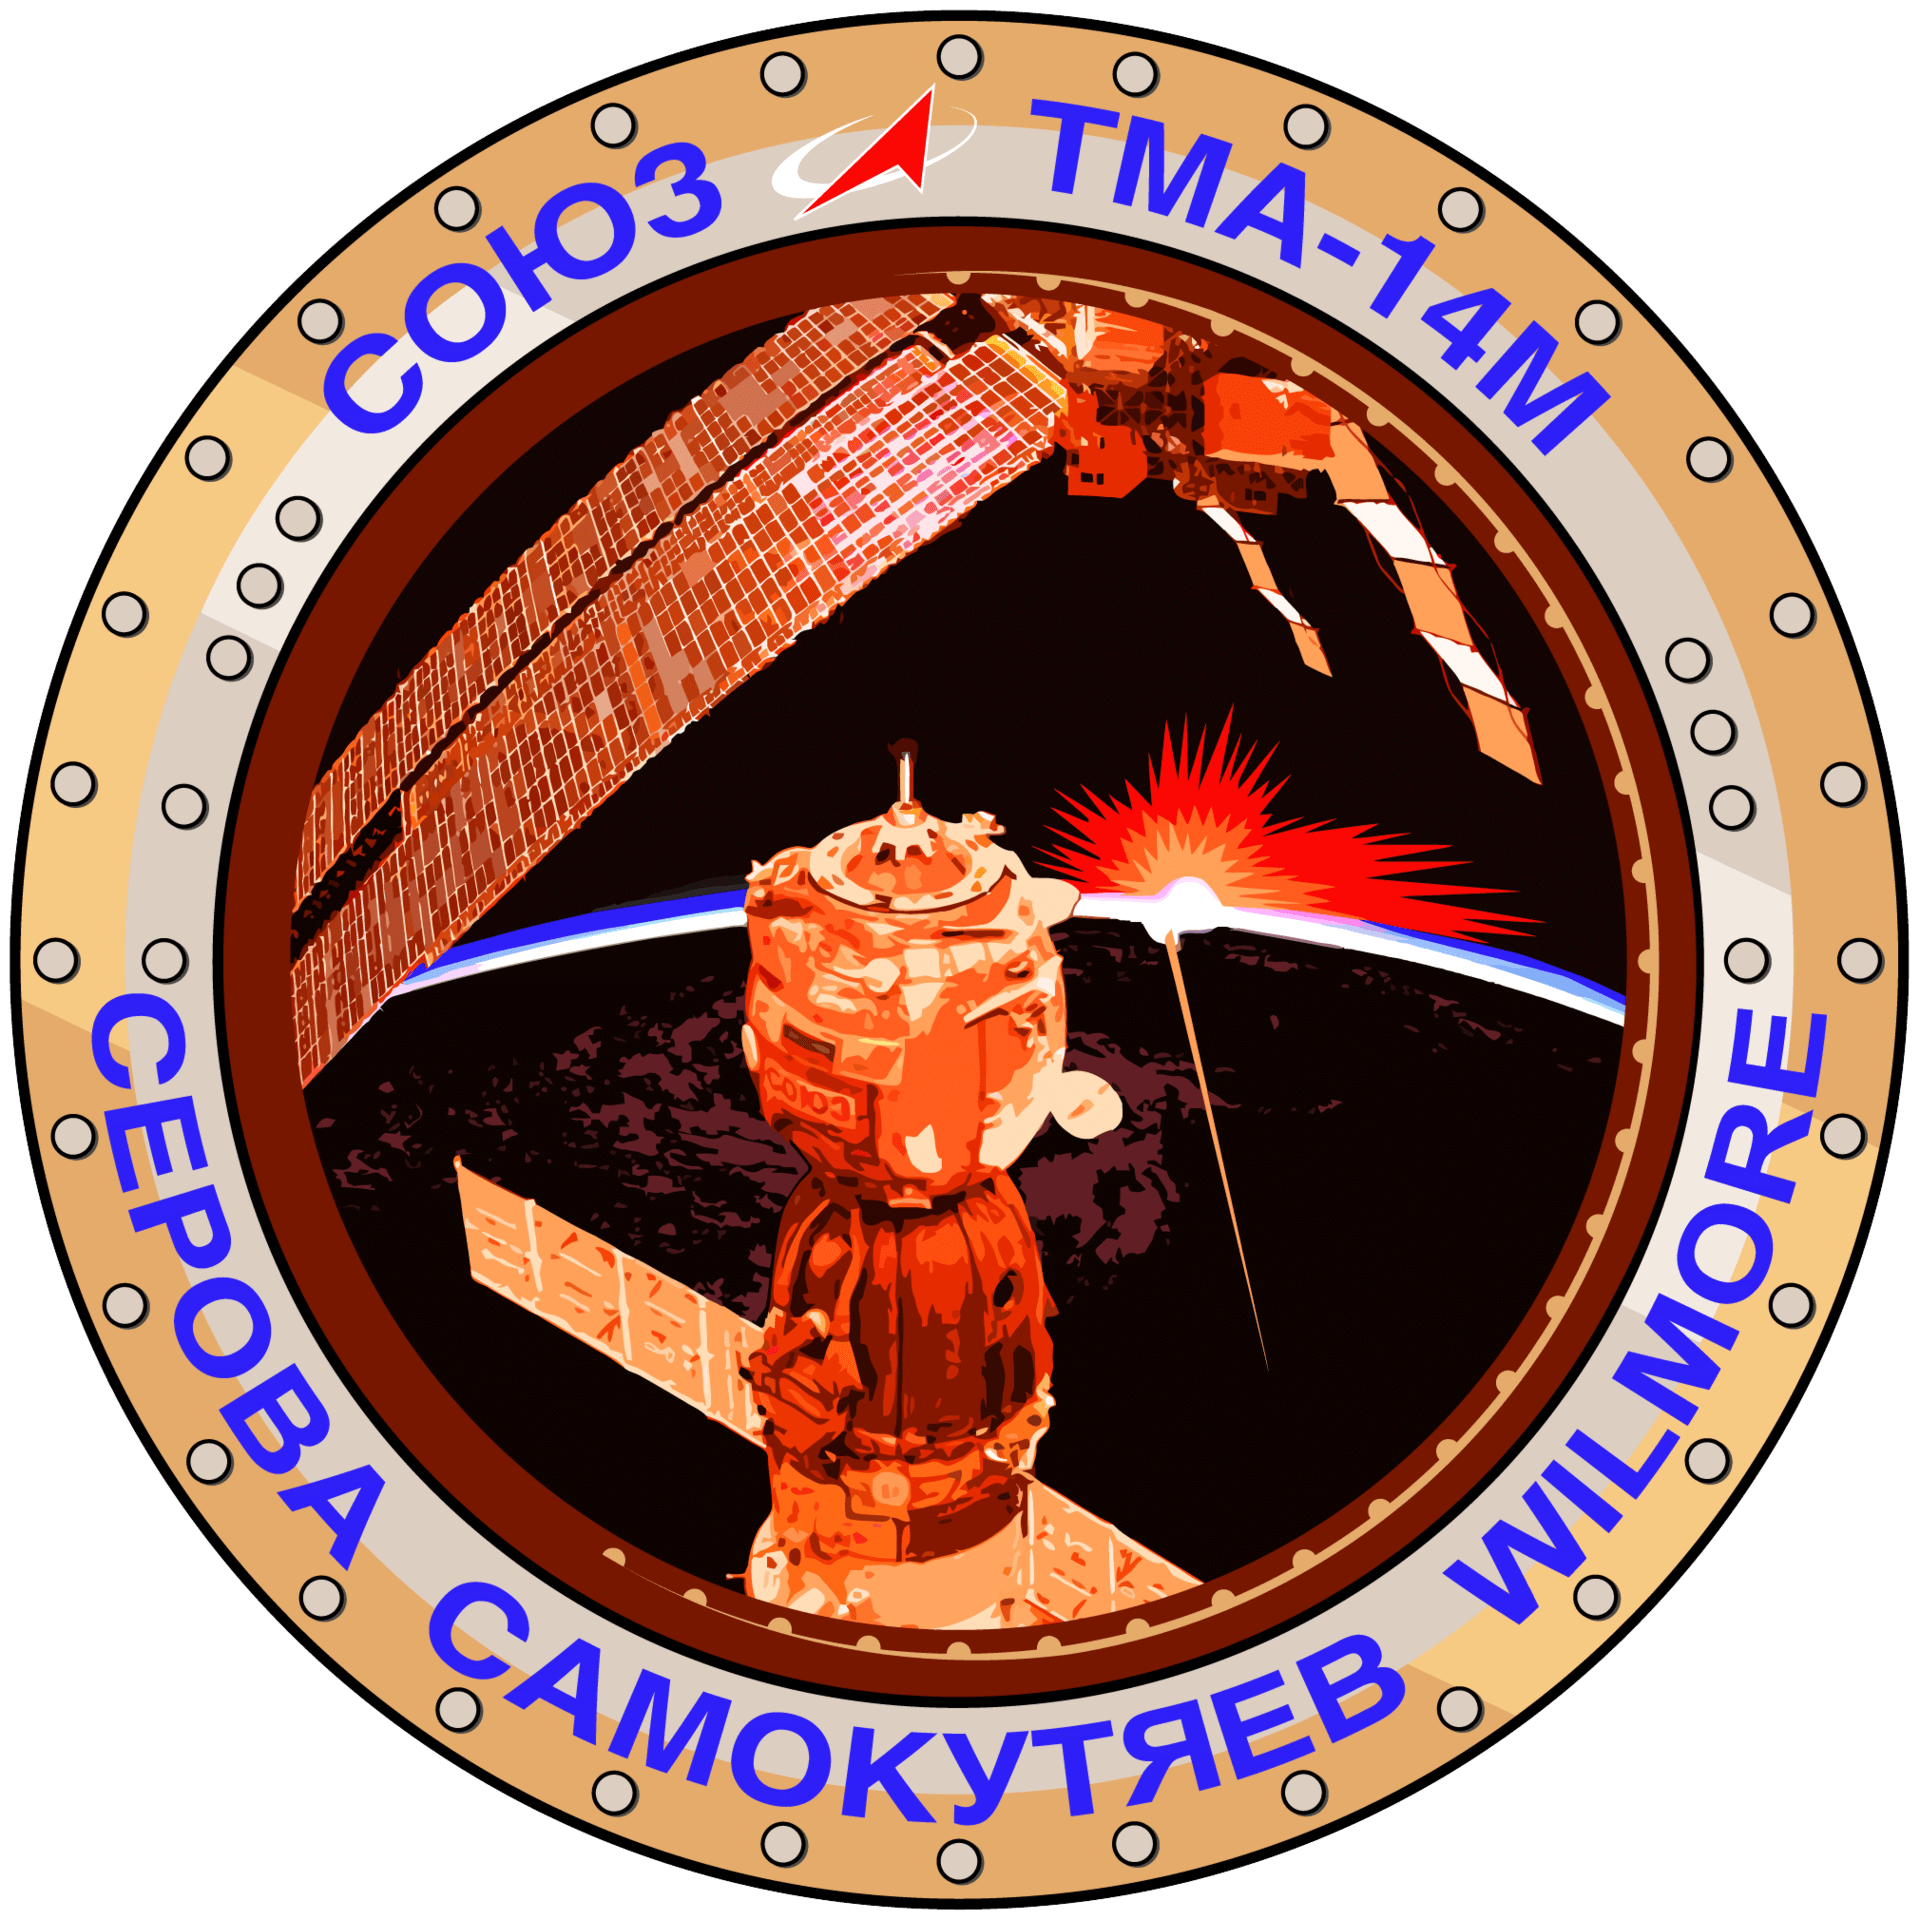 Mission patch for Soyuz TMA-14M